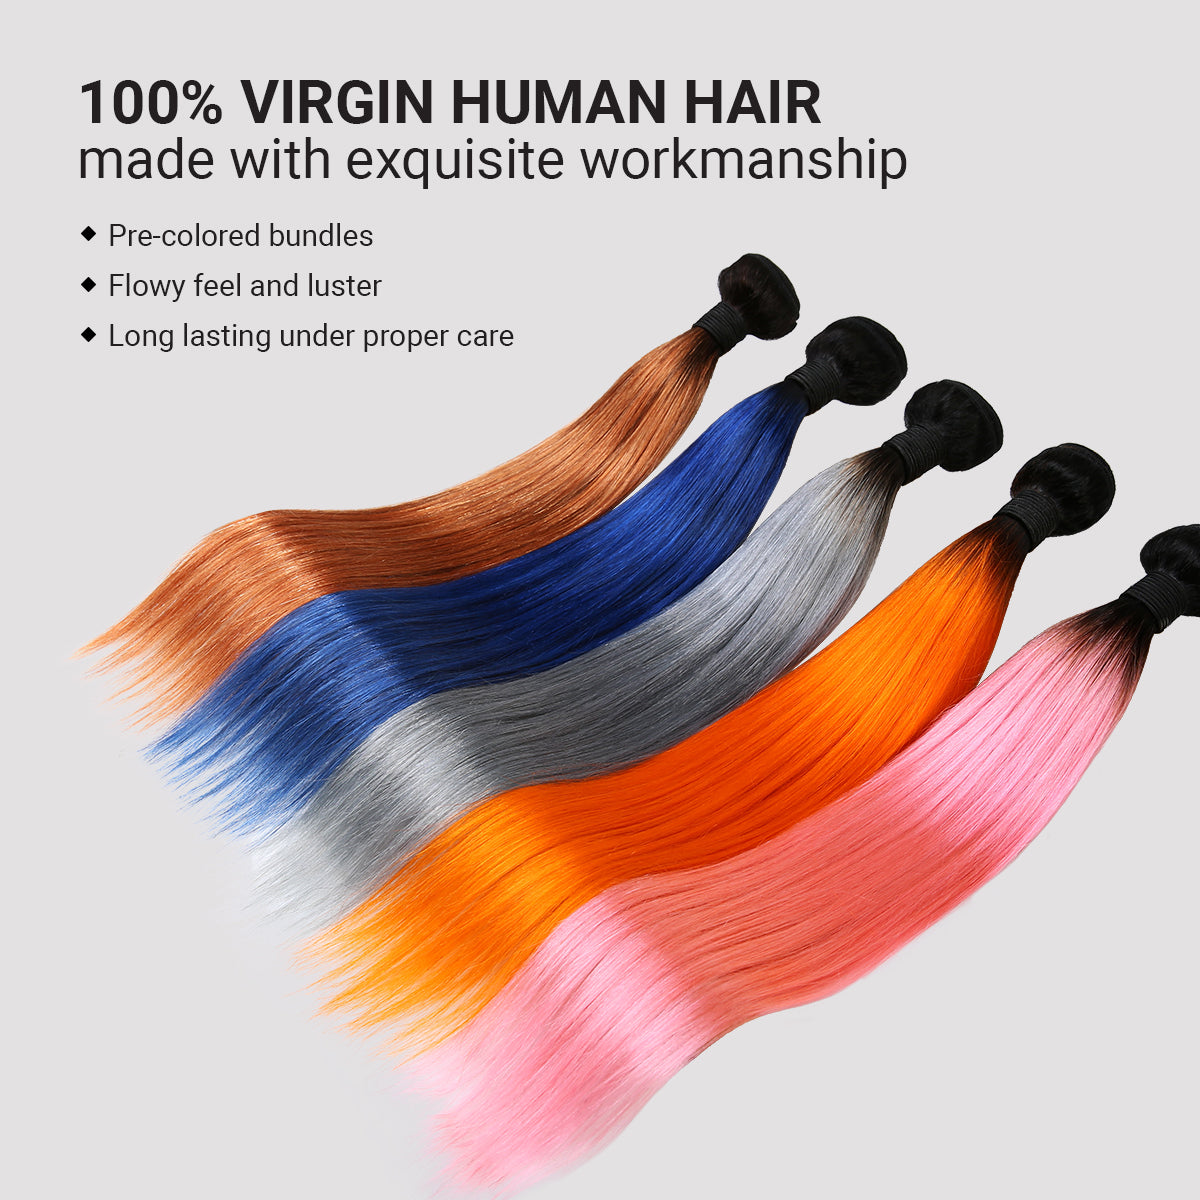 Uniq Hair 100% Virgin Human Hair Brazilian Bundle Hair Weave 9A Straight #OTGRAY Find Your New Look Today!